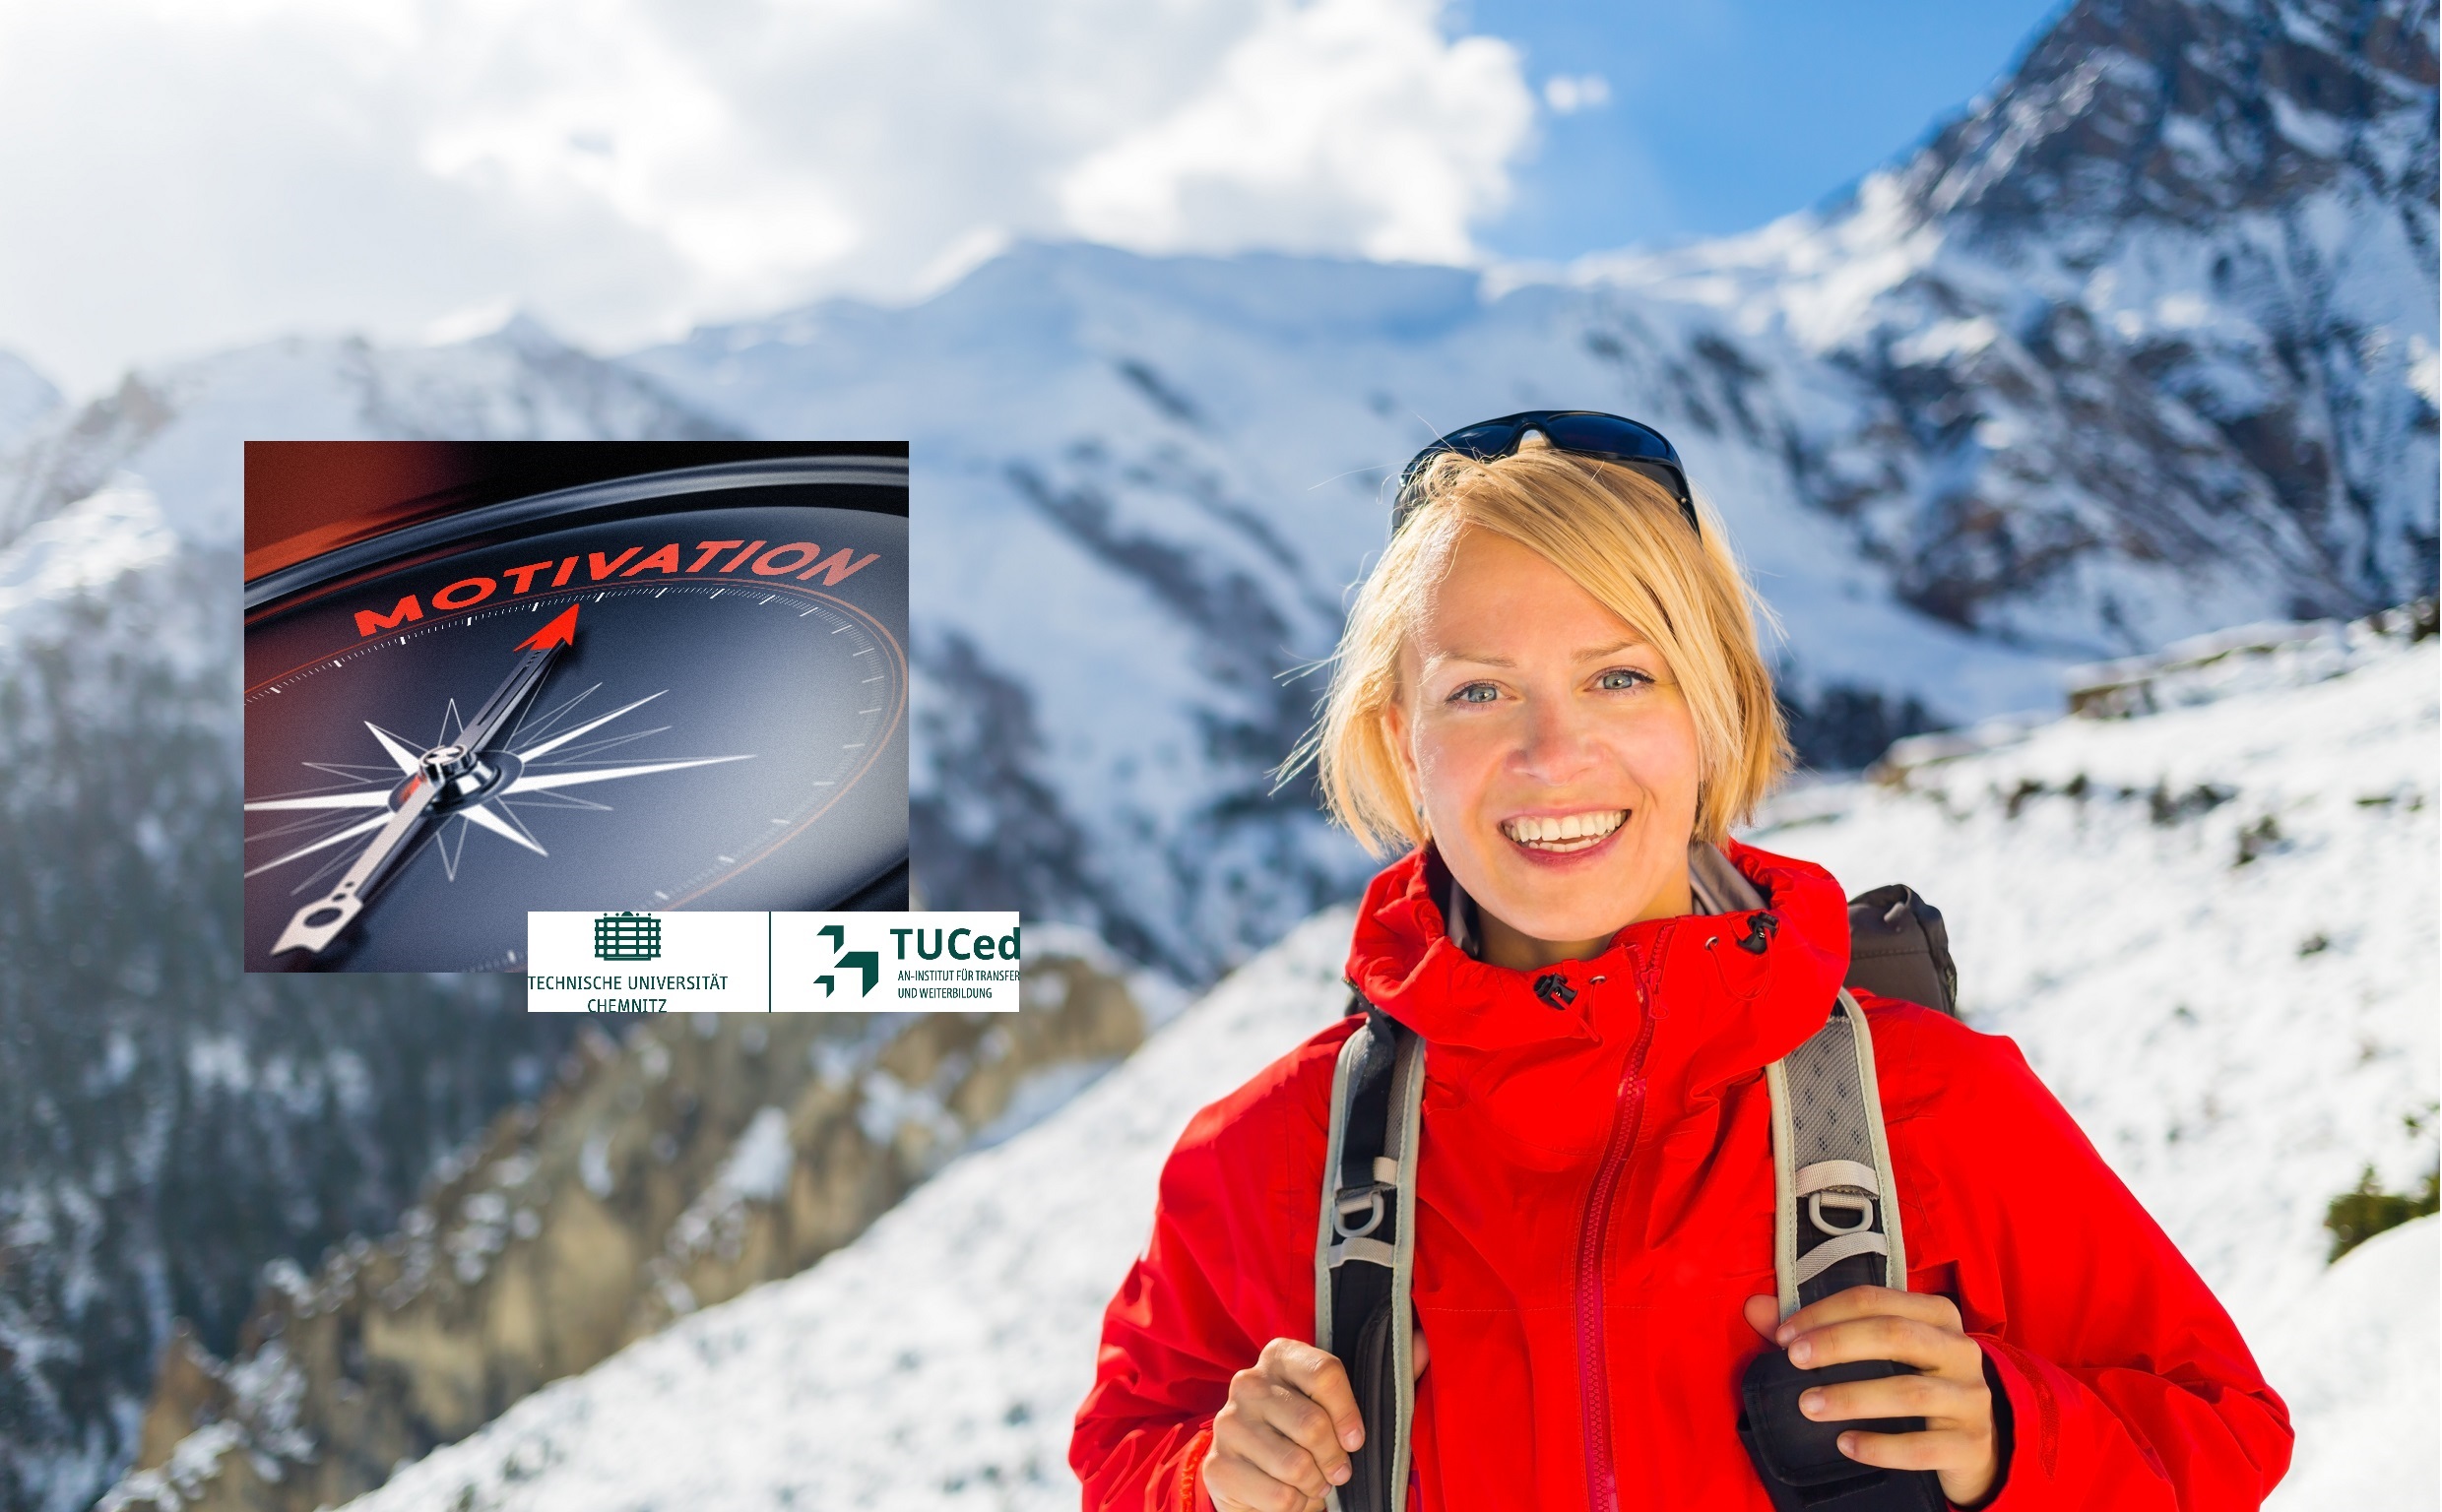 http://www.dreamstime.com/royalty-free-stock-photography-woman-hiker-walking-himalaya-mountains-nepal-nordic-trekking-snow-white-winter-nature-beautiful-mountain-landscape-image46691947